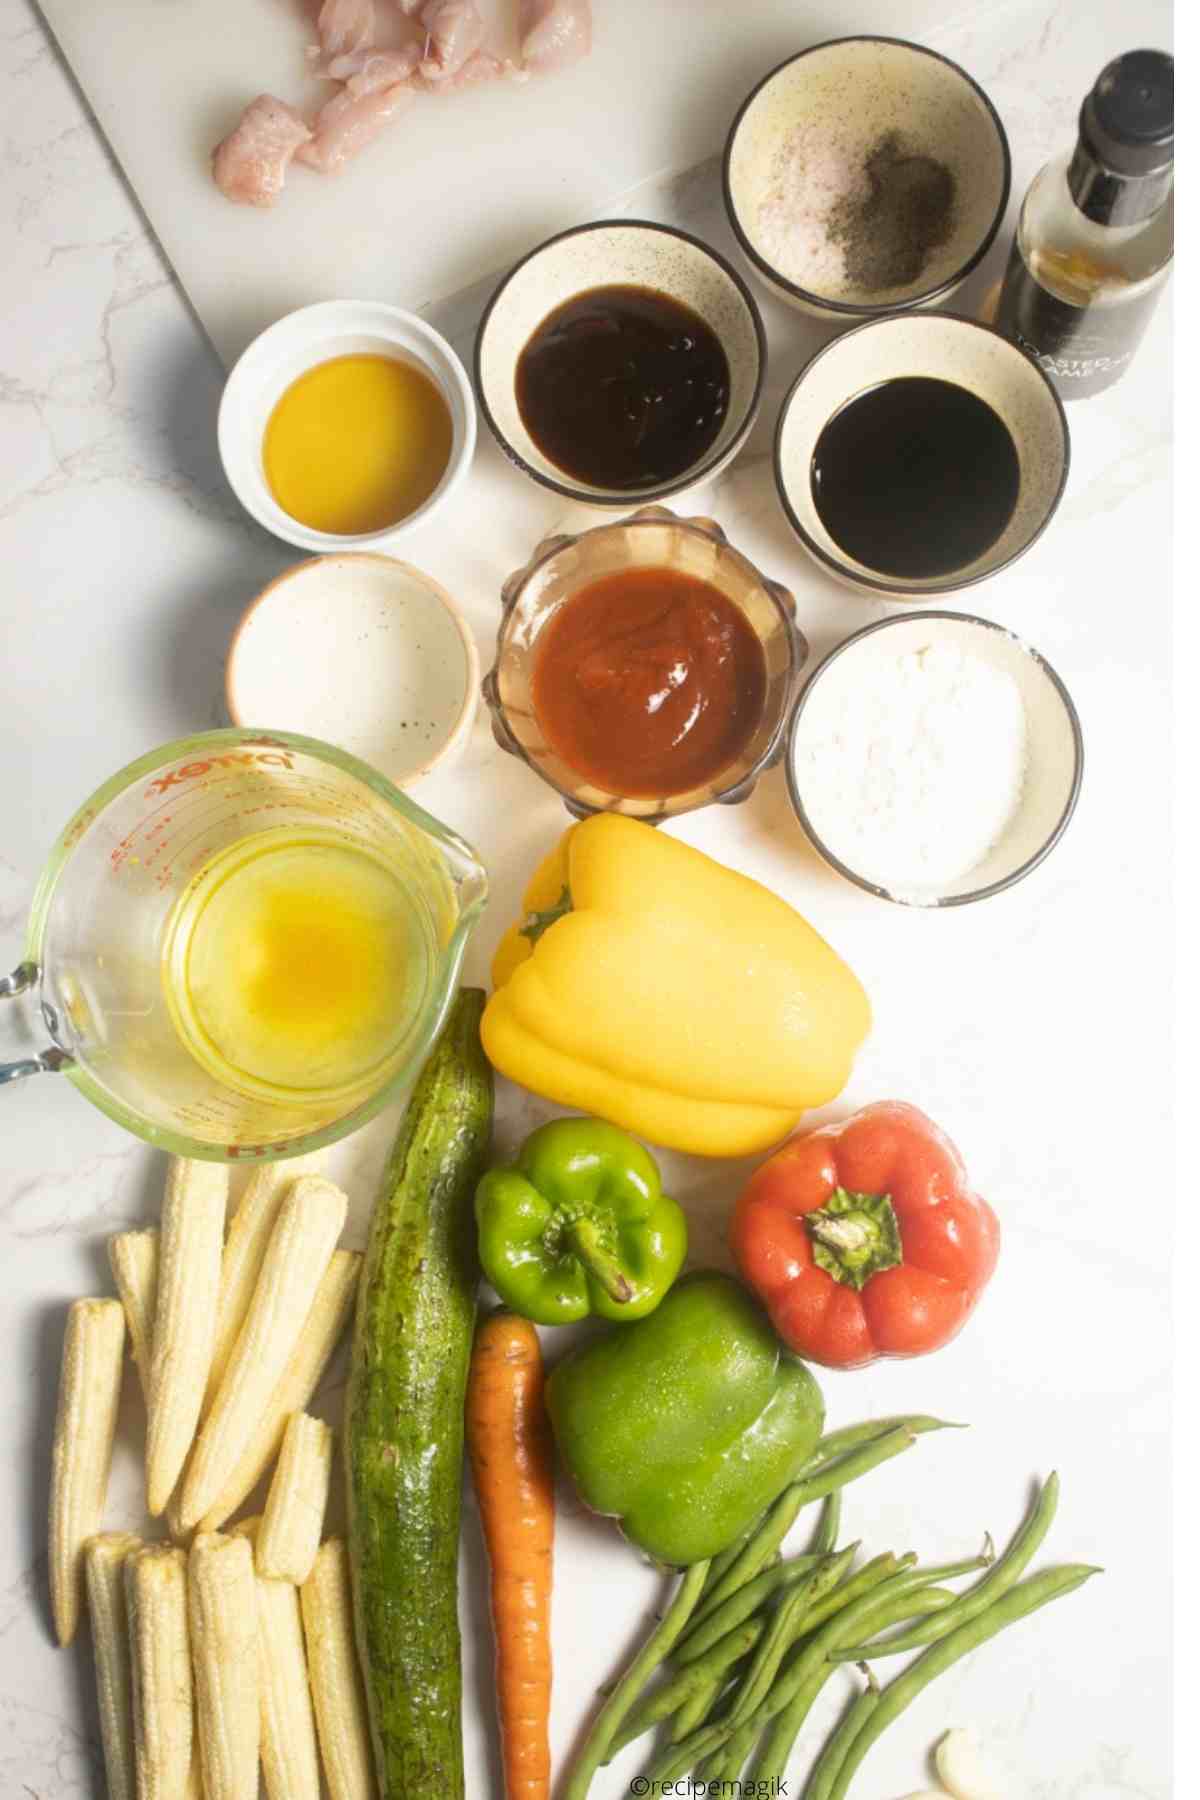 ingredients needed to make Hunan Chicken